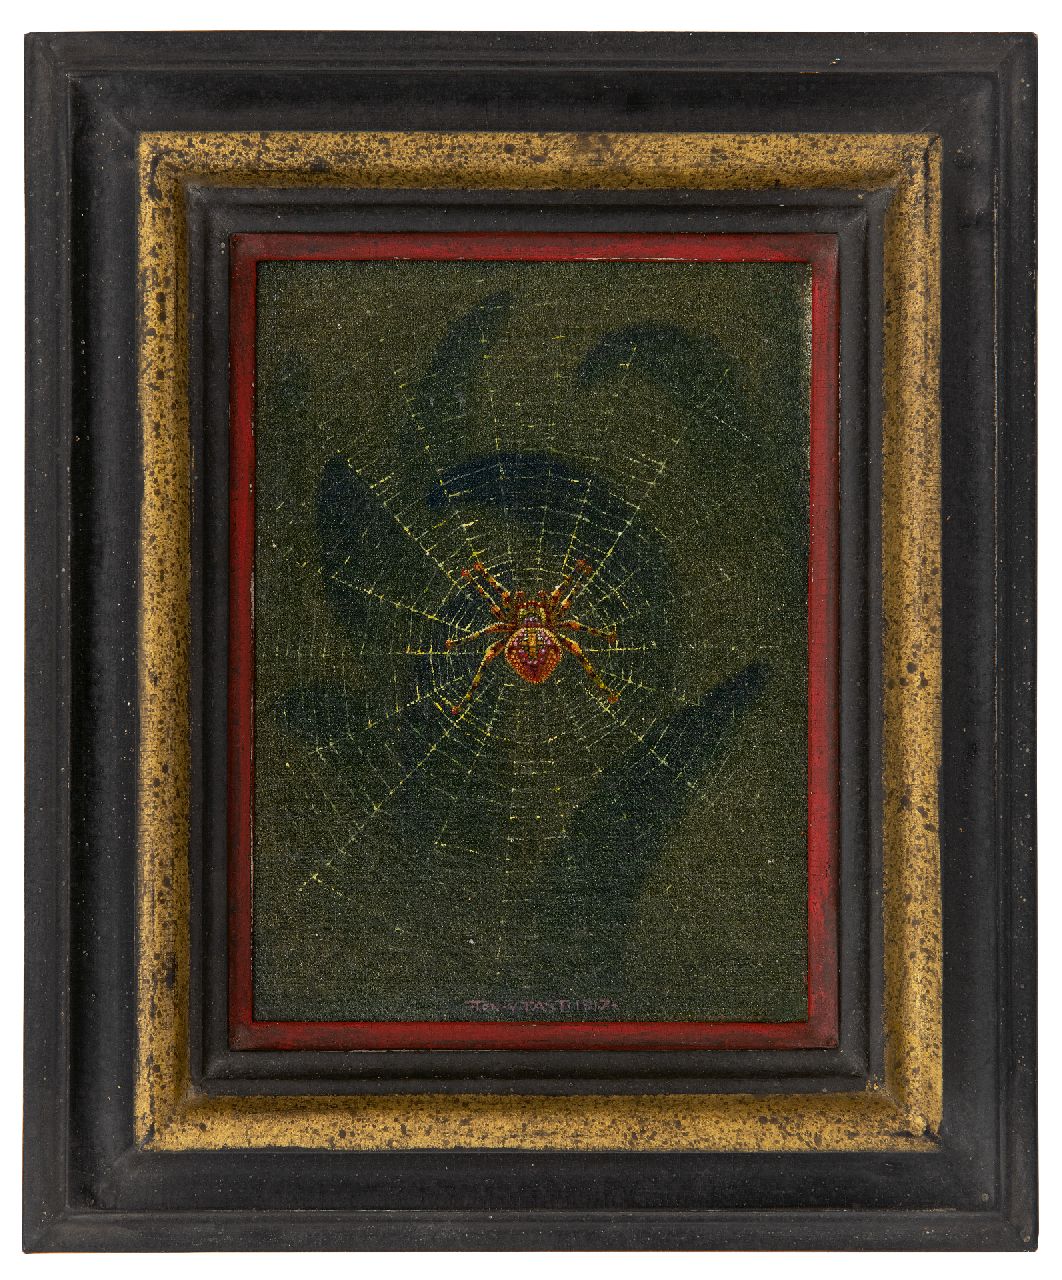 Tast (Anton van der Valk)  van | Ton van Tast (Anton van der Valk) | Paintings offered for sale | Spider in a web, oil on canvas laid down on panel 17.5 x 13.0 cm, signed l.m. and dated 1917